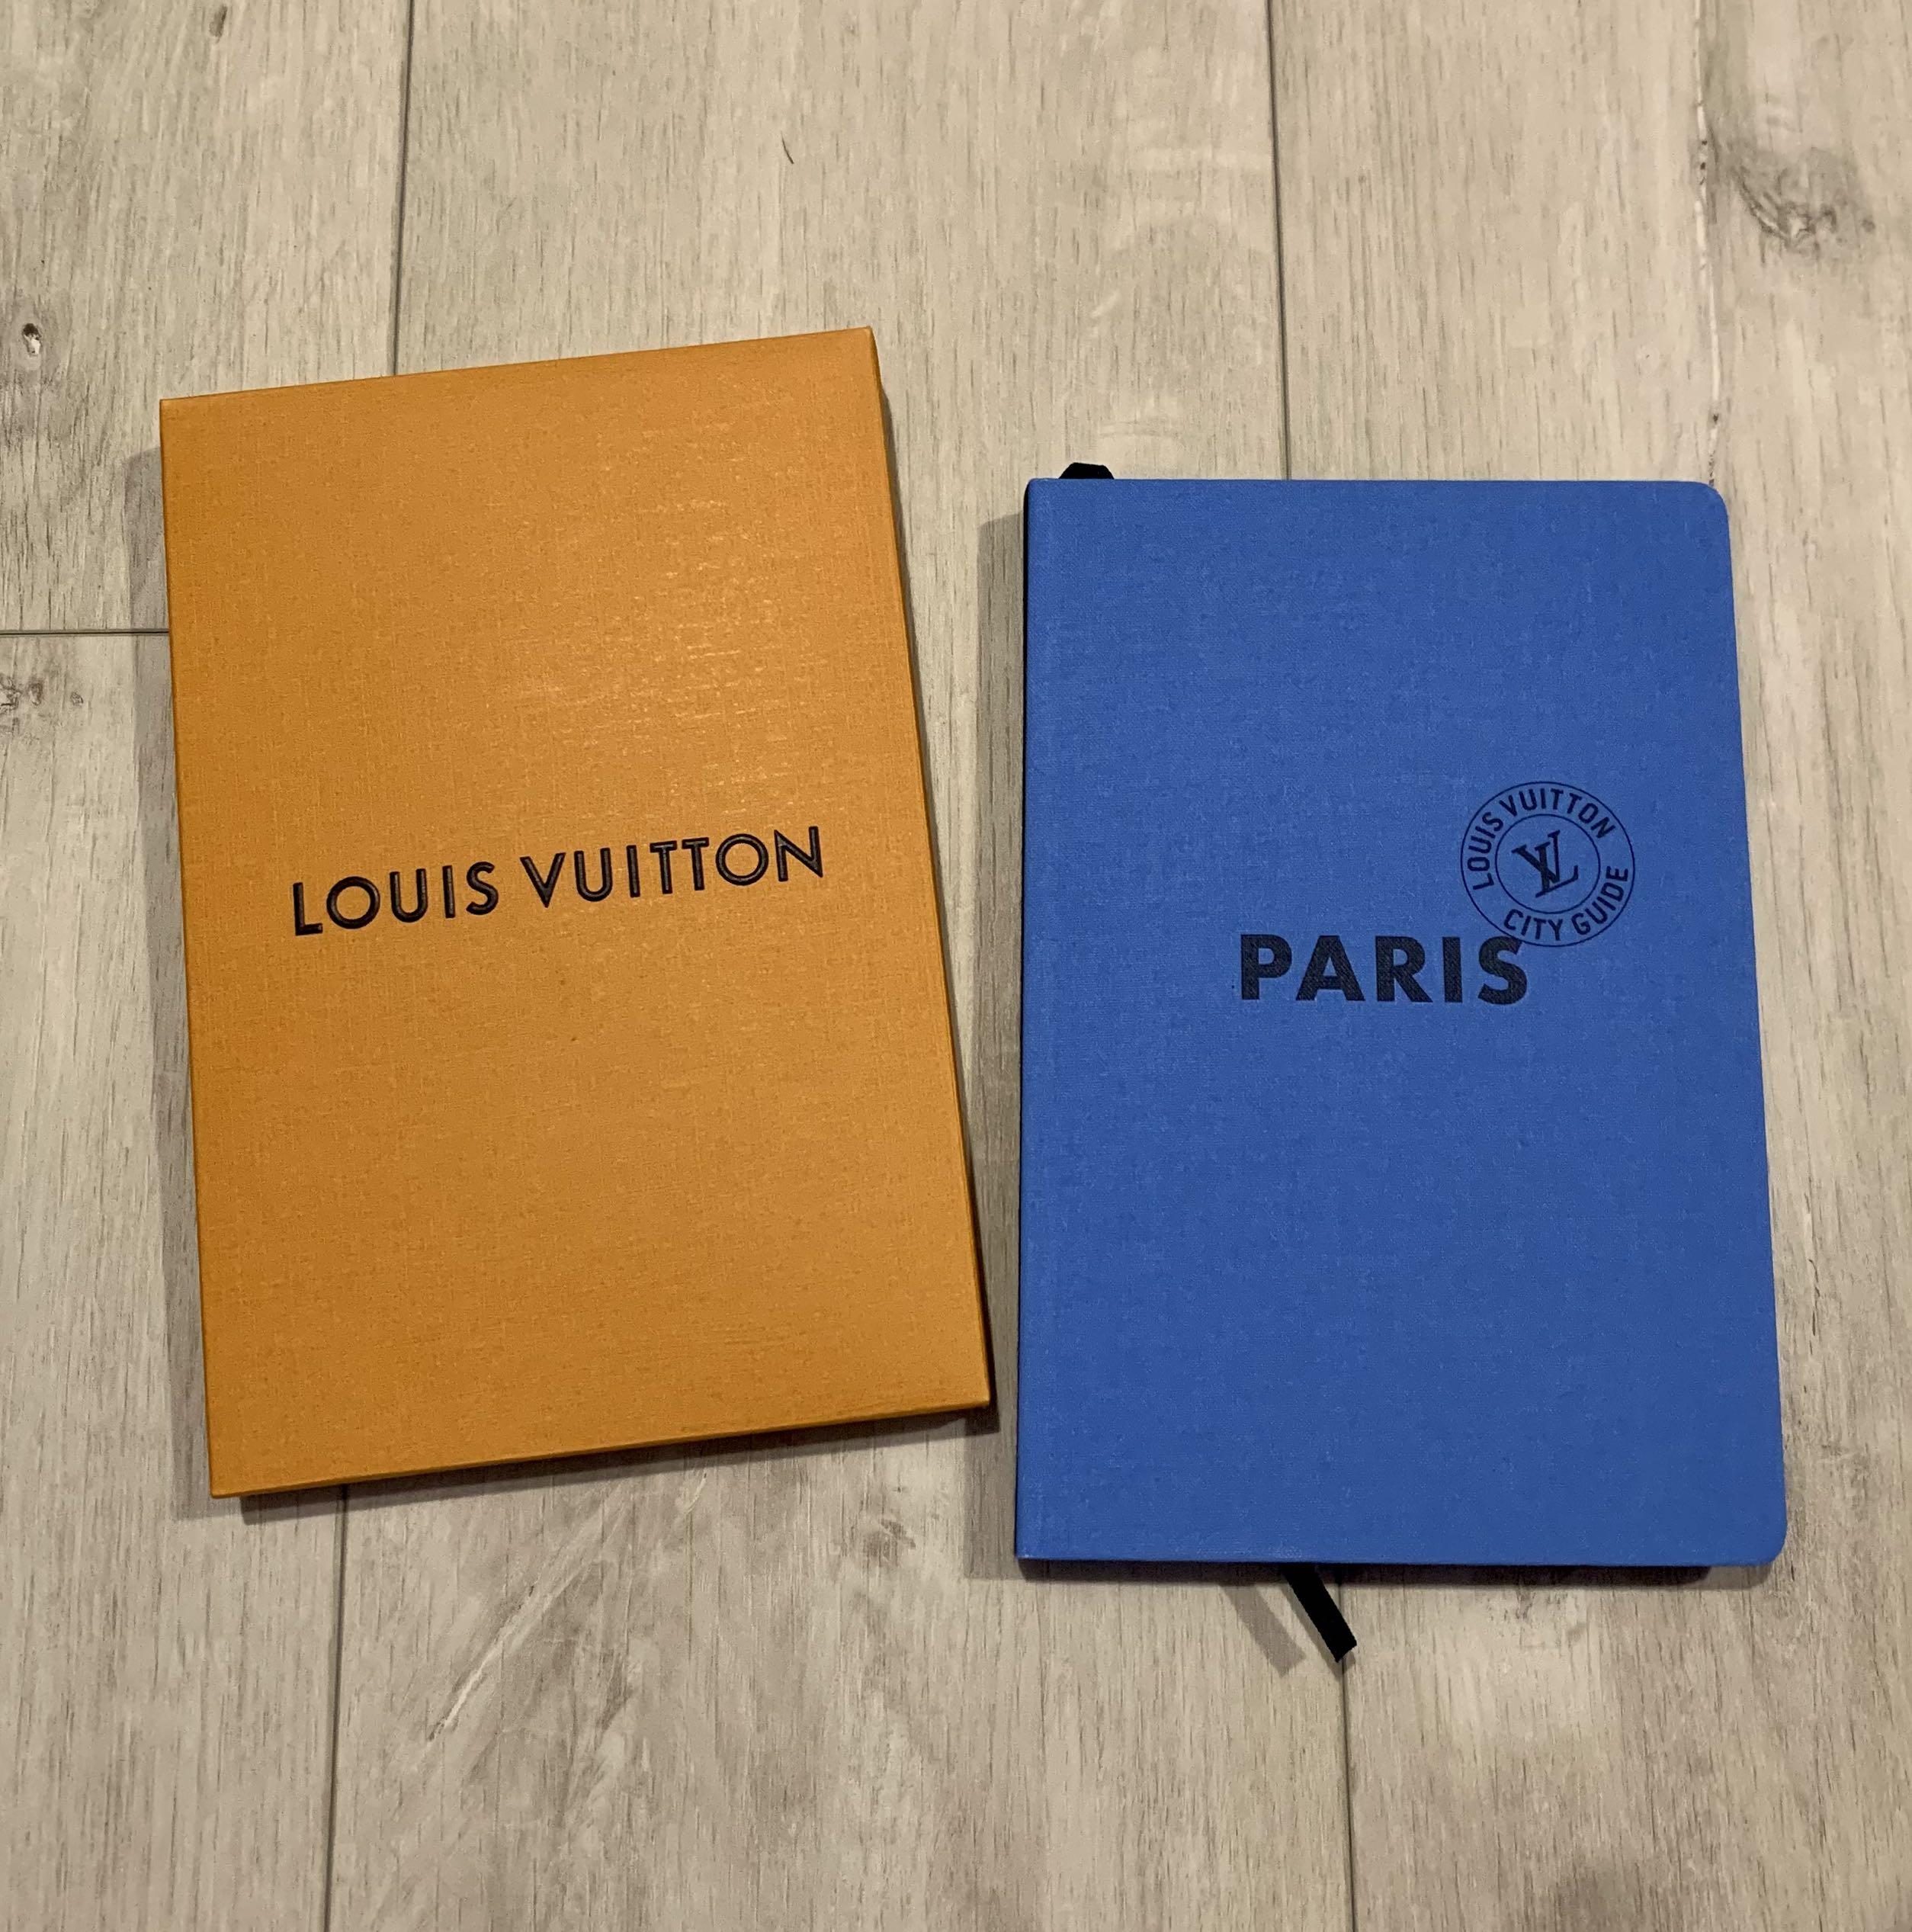 In box) Louis Vuitton Paris city guide (English), Hobbies & Toys